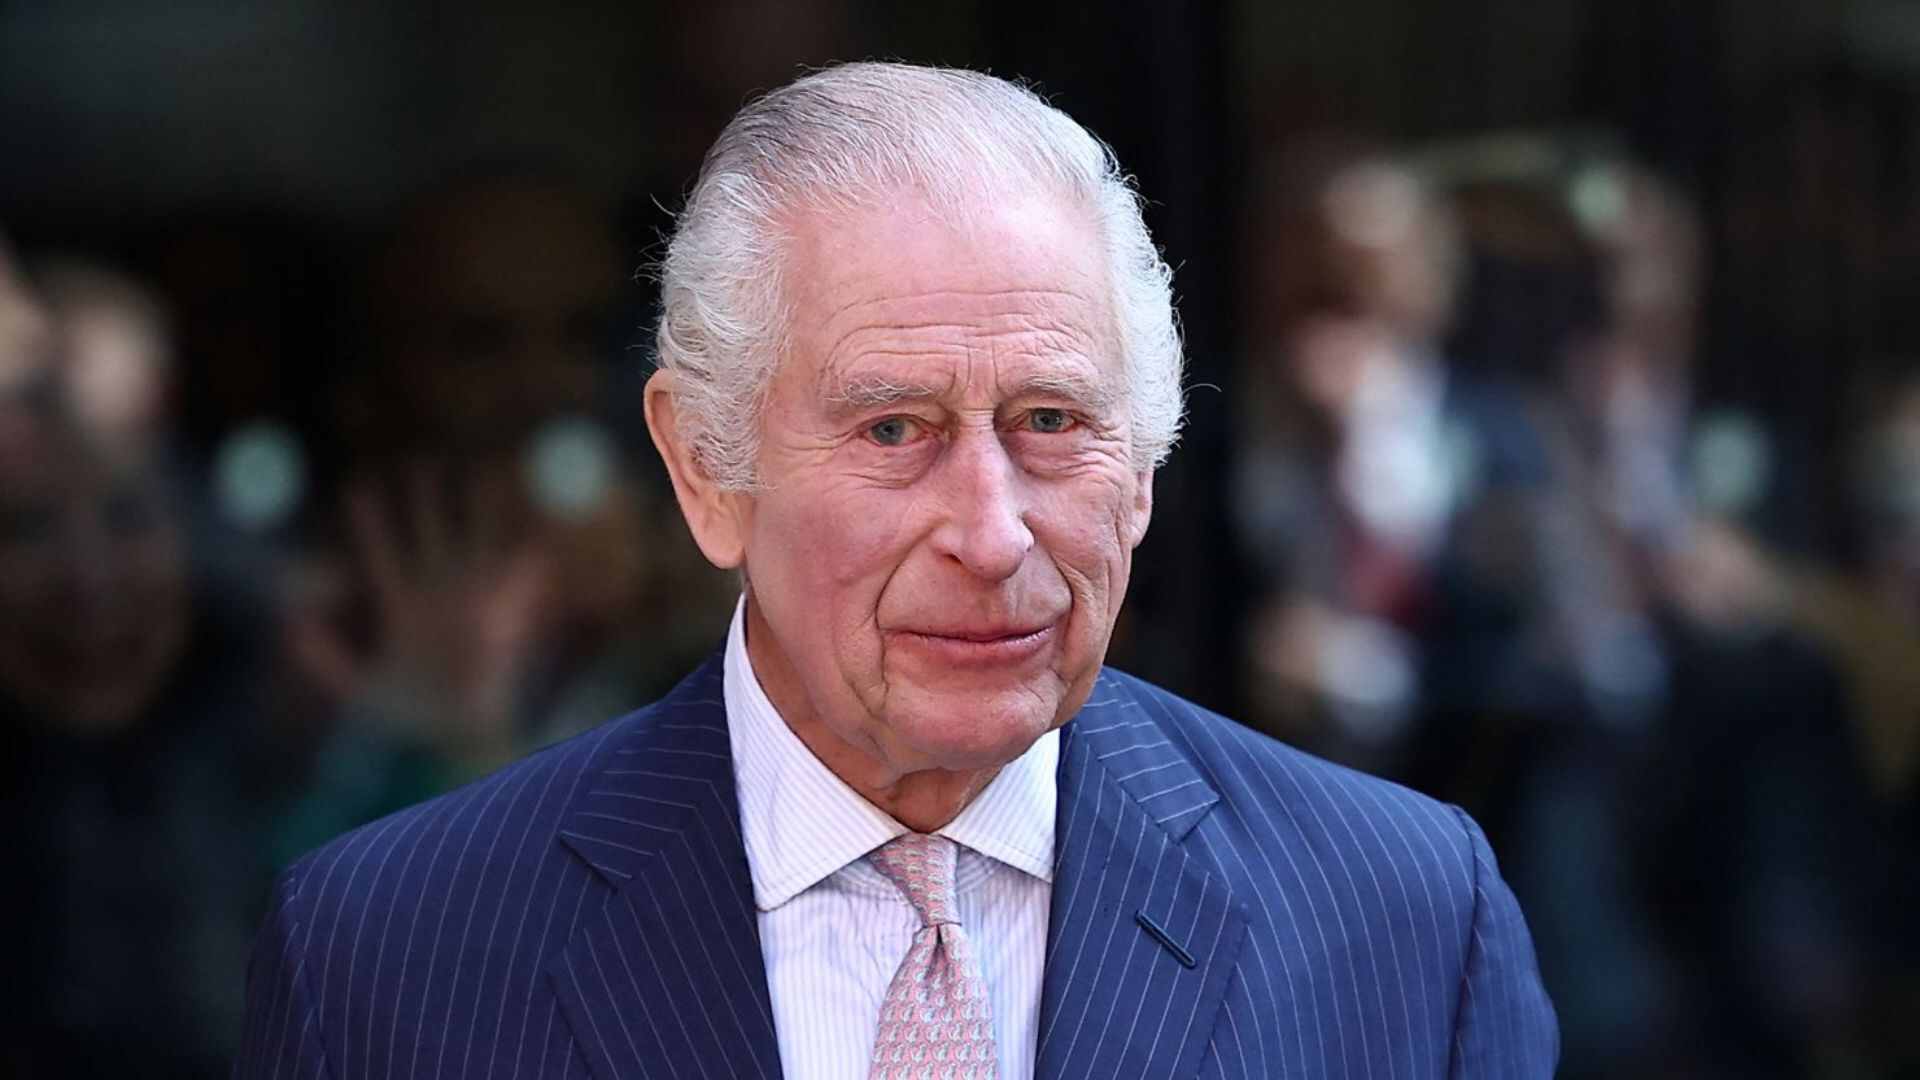 King Charles III resumes his royal duties